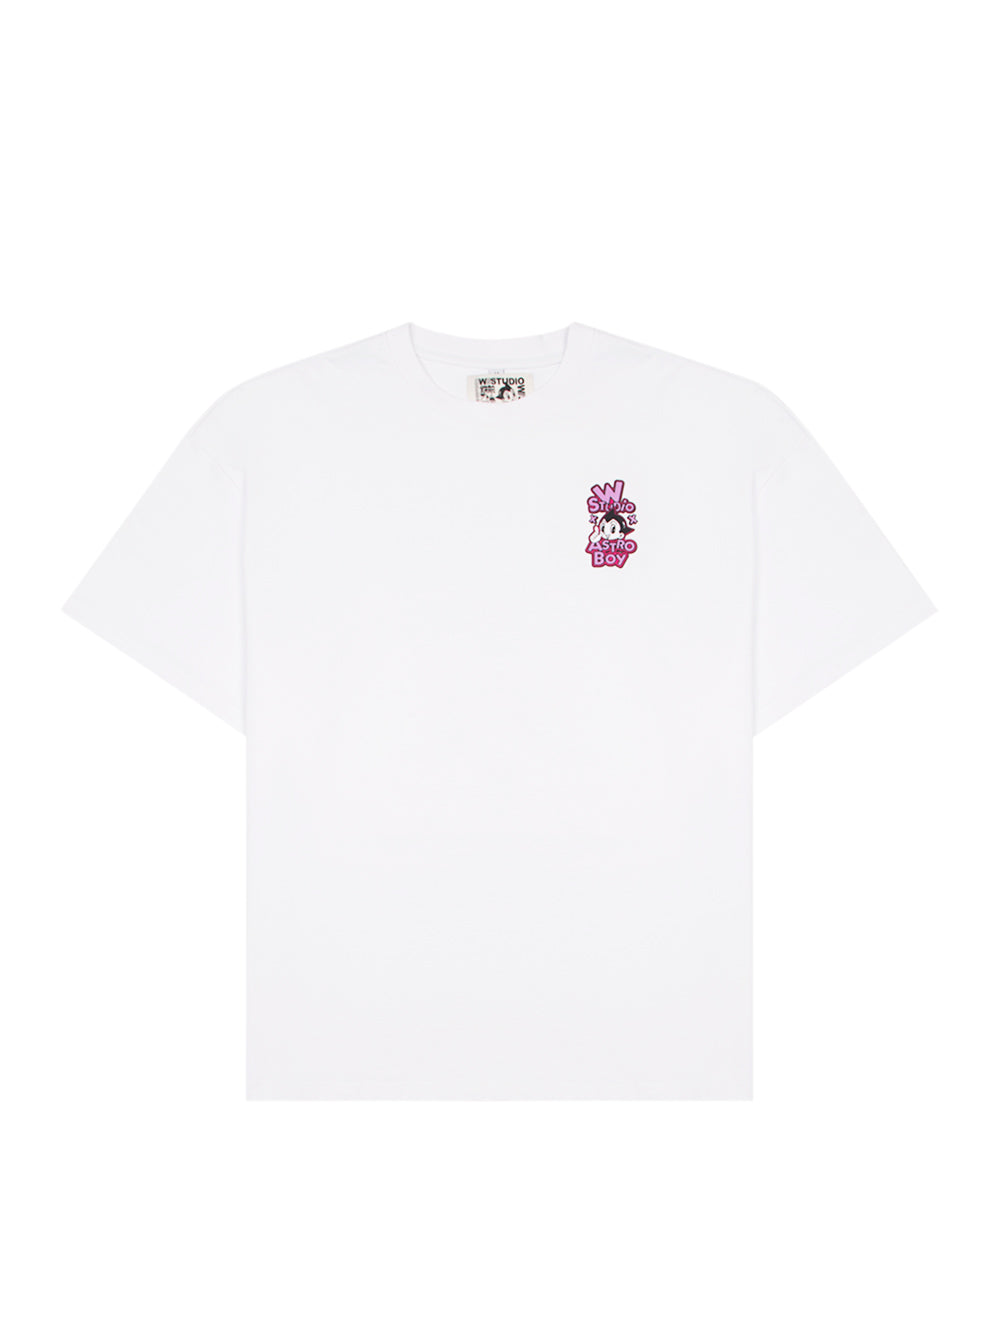 T-Shirt Astro Boy Magic Boots (White)